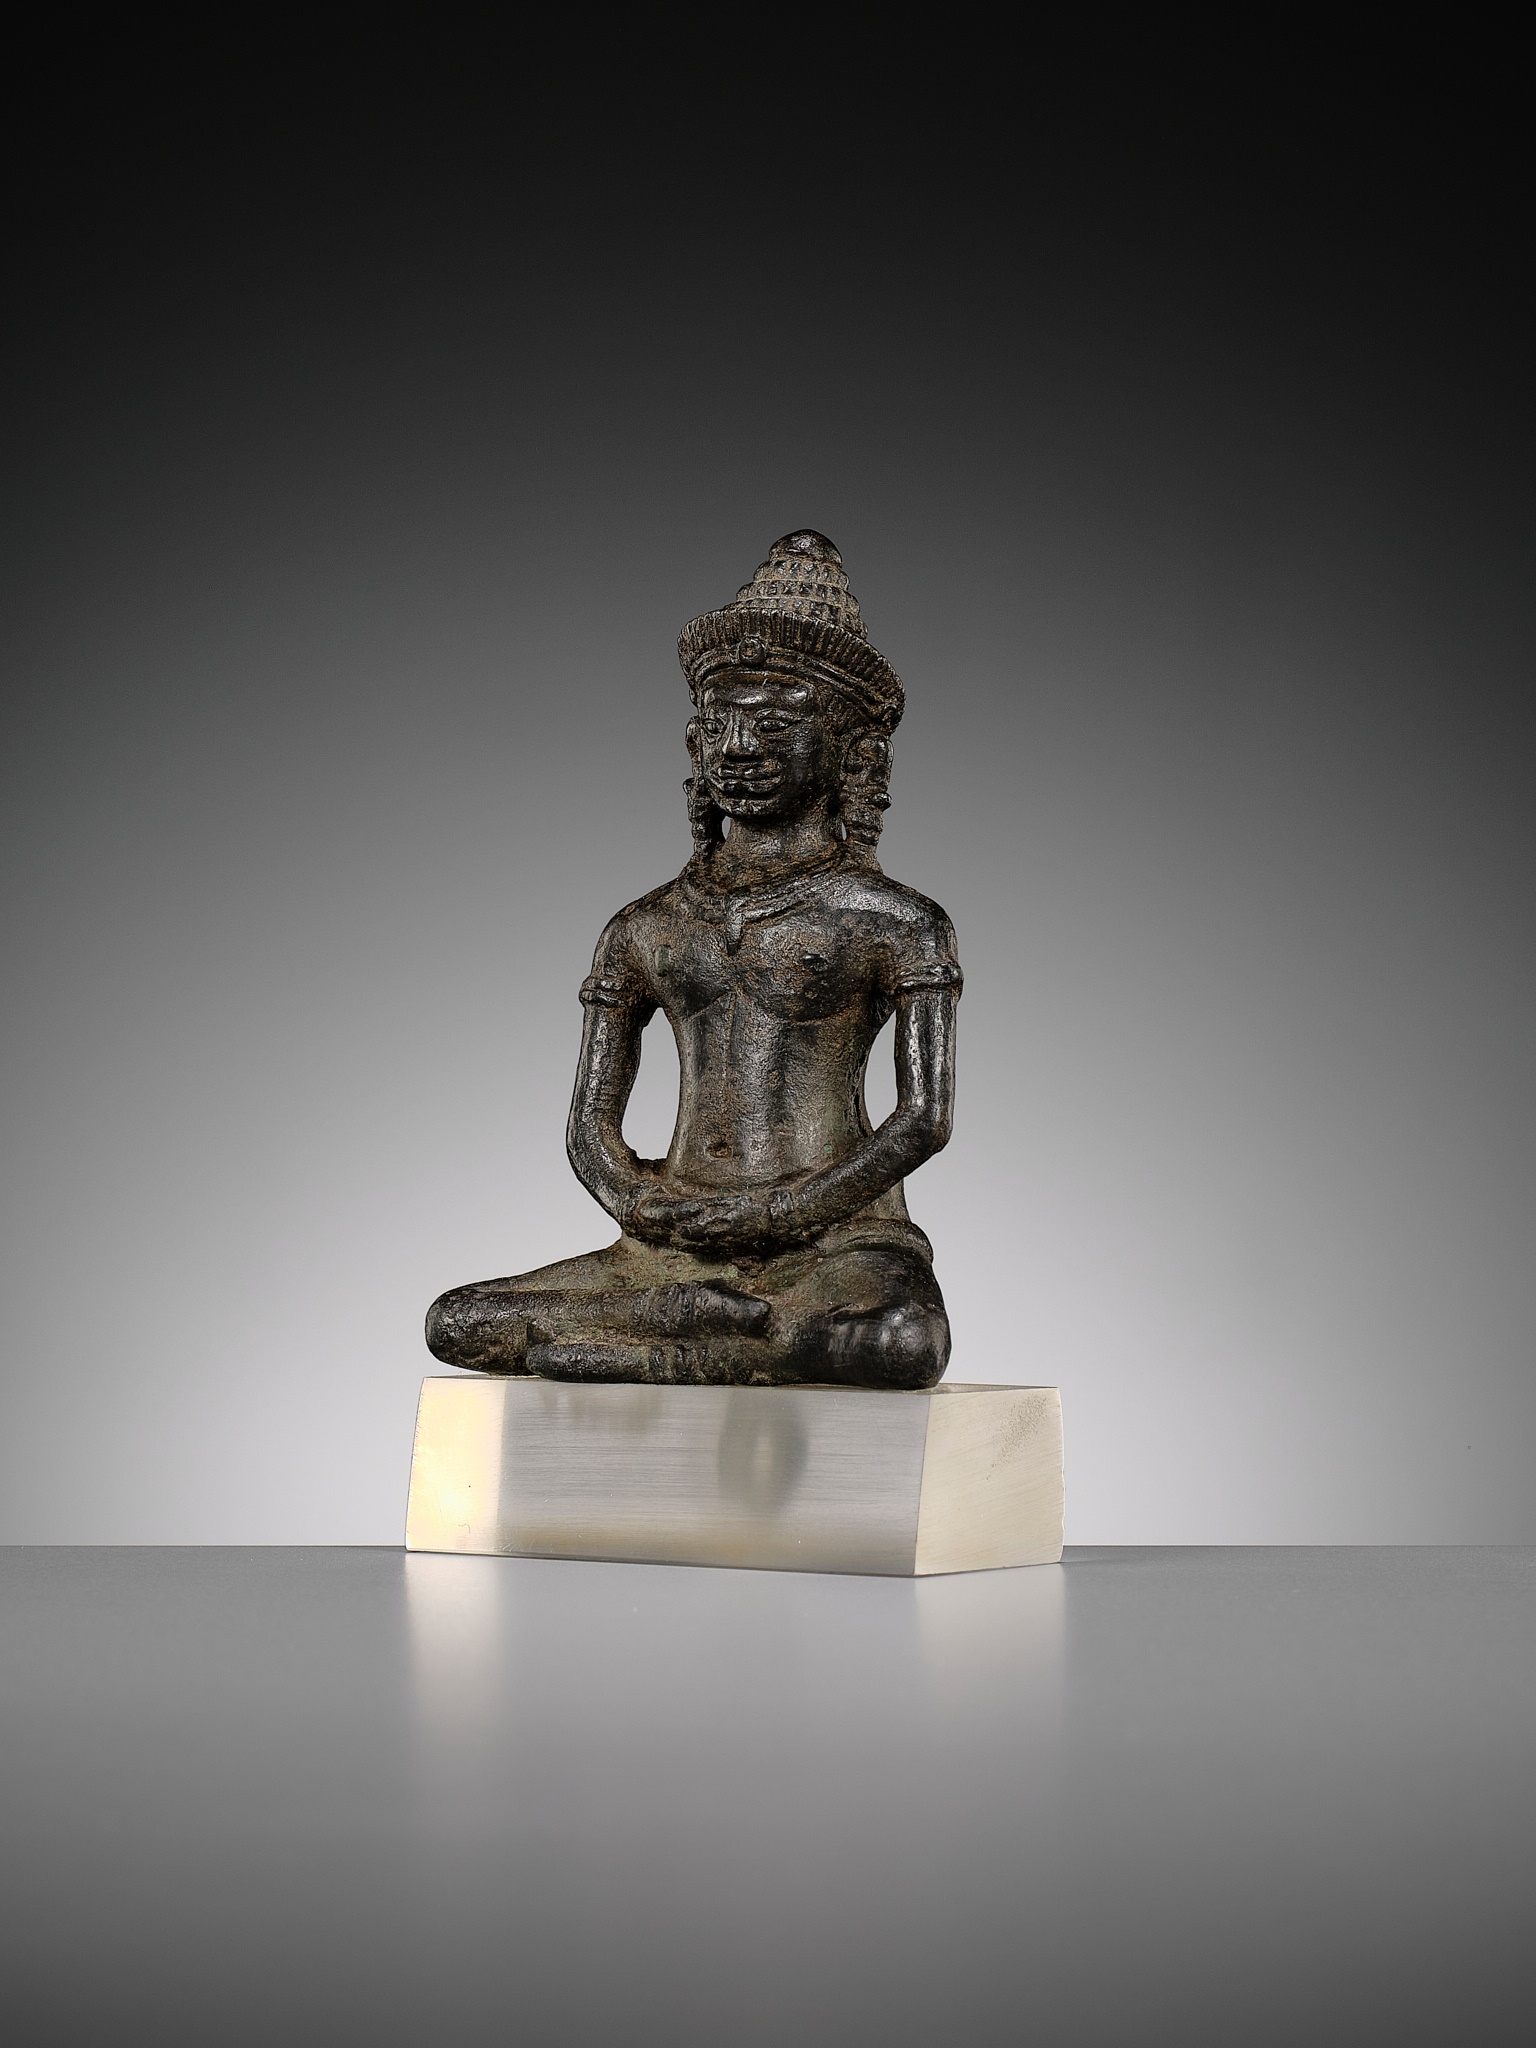 A BRONZE FIGURE OF BUDDHA, ANGKOR PERIOD, KHMER EMPIRE, 12TH CENTURY - Image 6 of 9